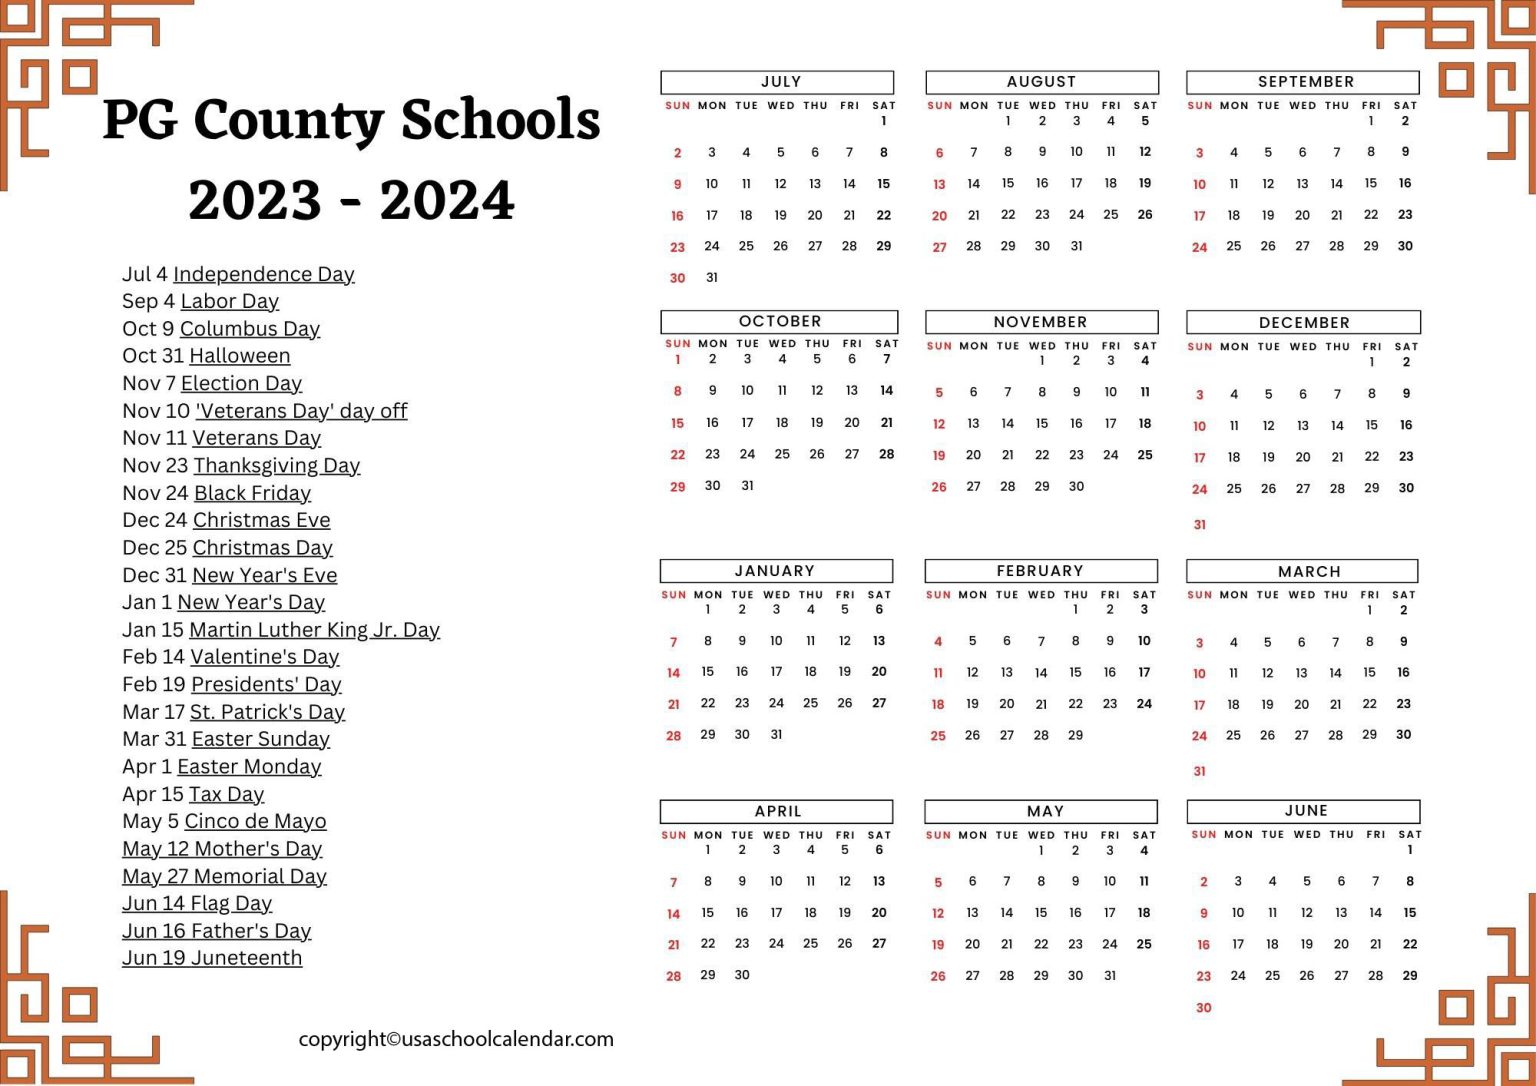 PG County Schools Calendar Holidays 2023 2024